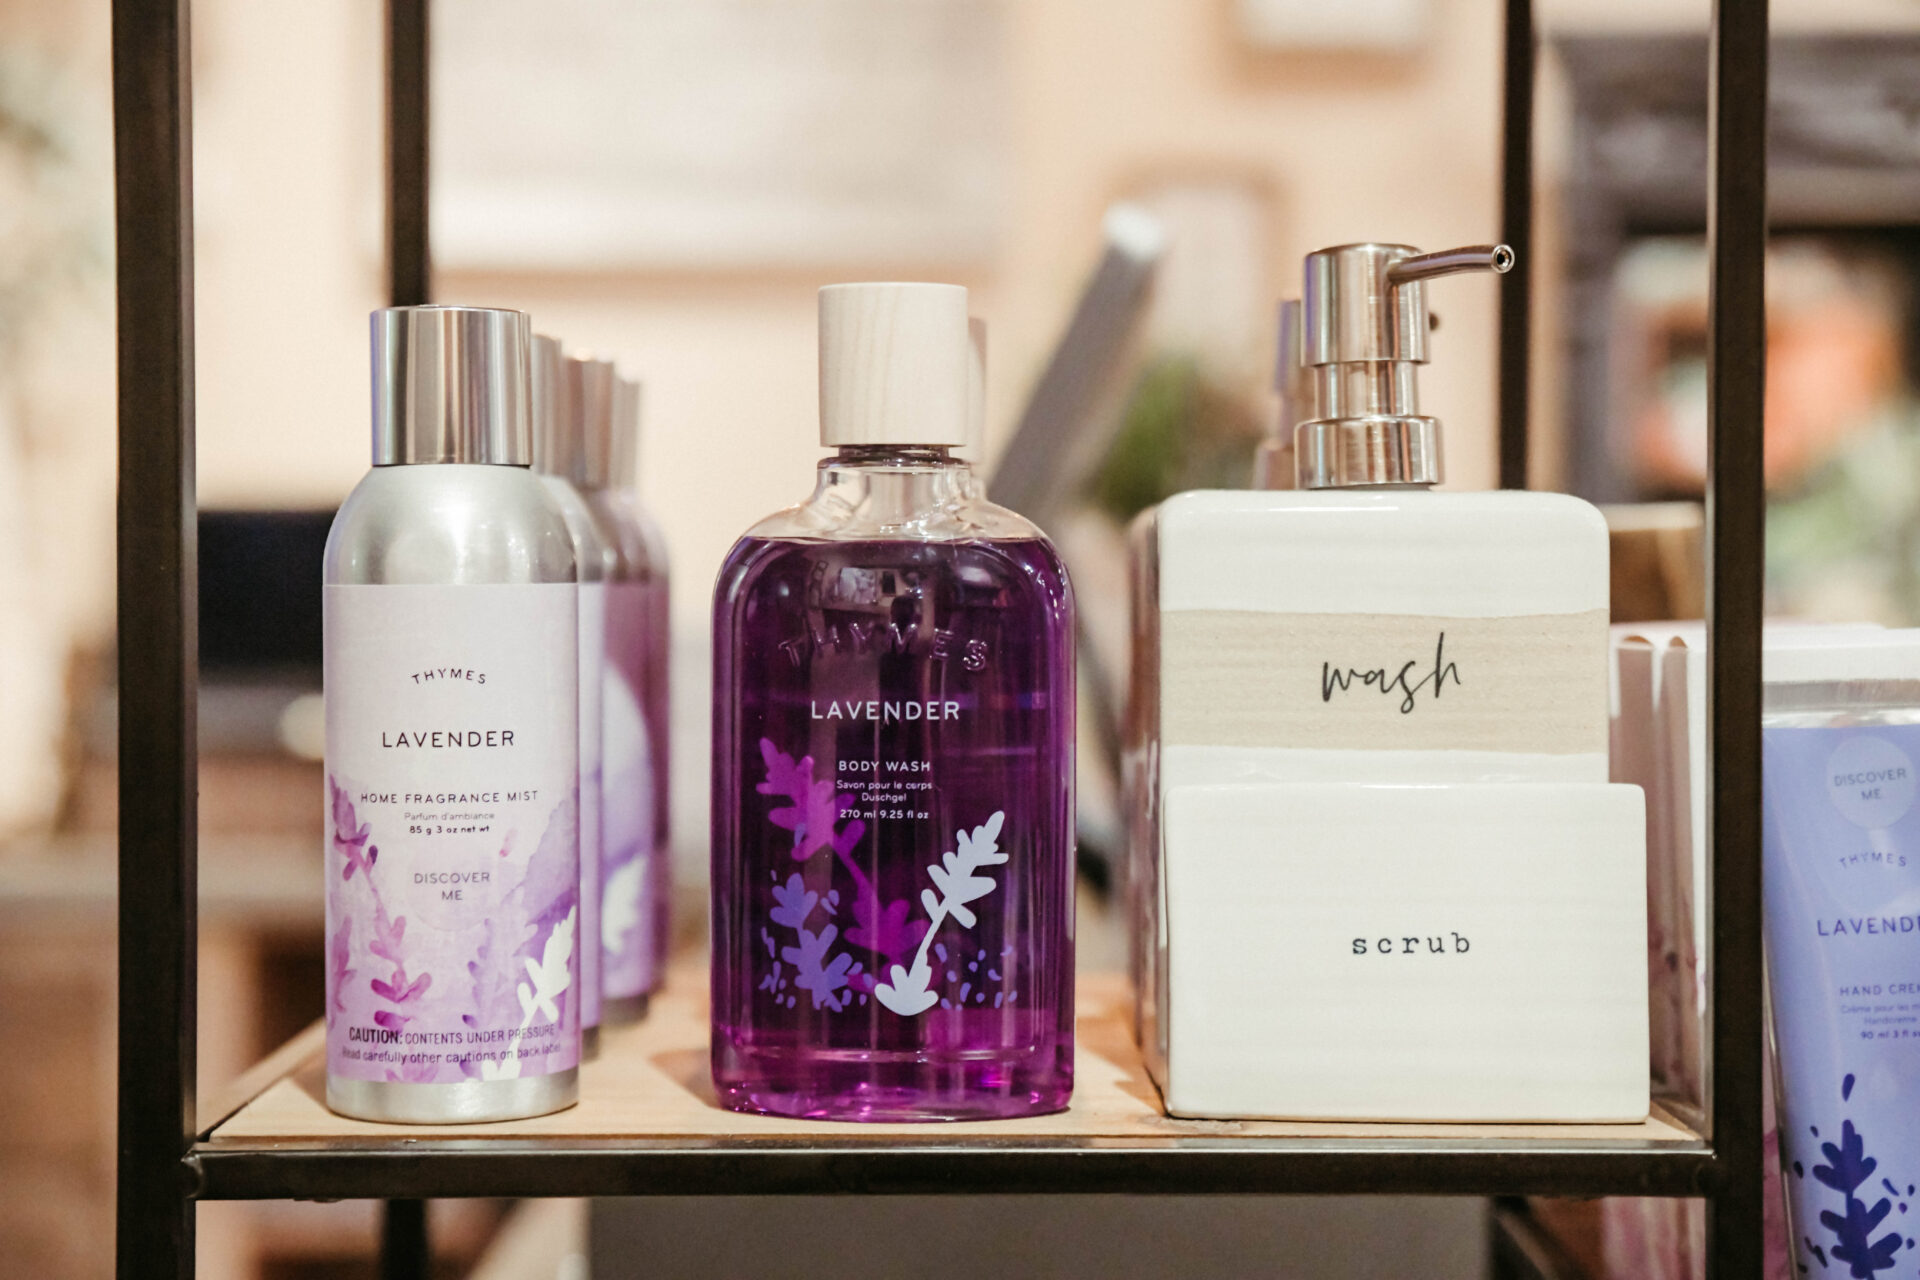 Thymes Fragrance mist, body wash and scrub bottles in the shelf